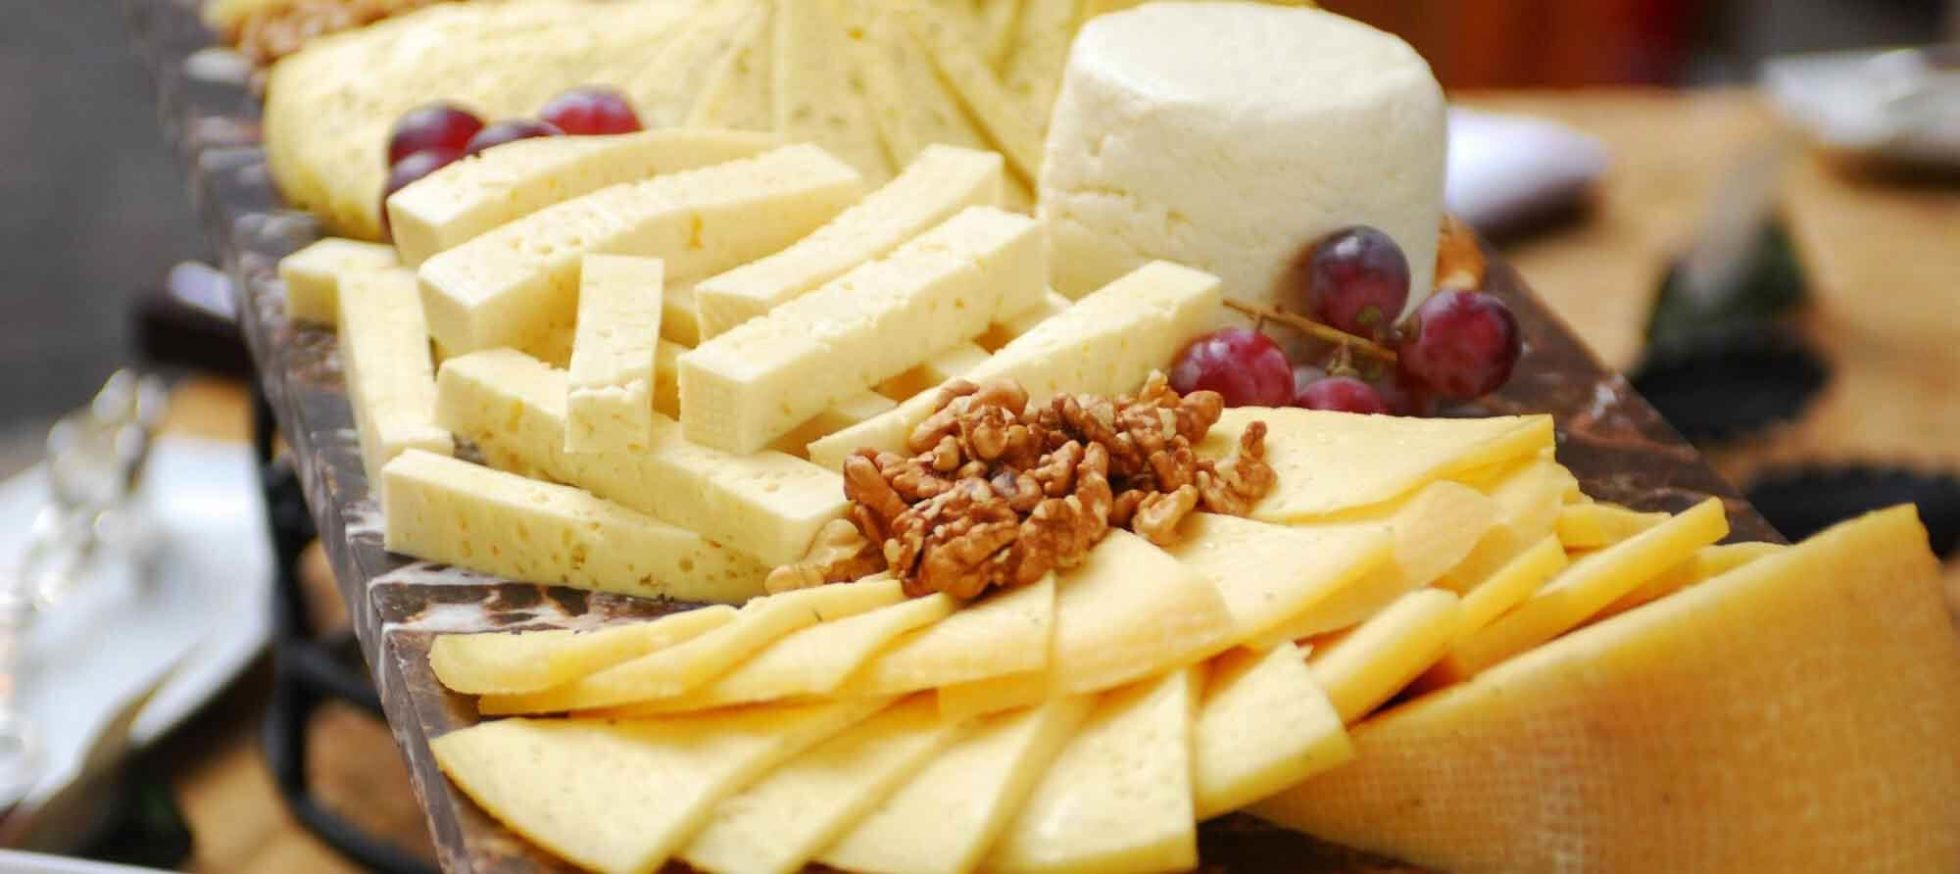 KIVY Boite a fromage pour frigo avec couvercle en bambou - Plateau fromage  - Cloche a fromage - Boîte